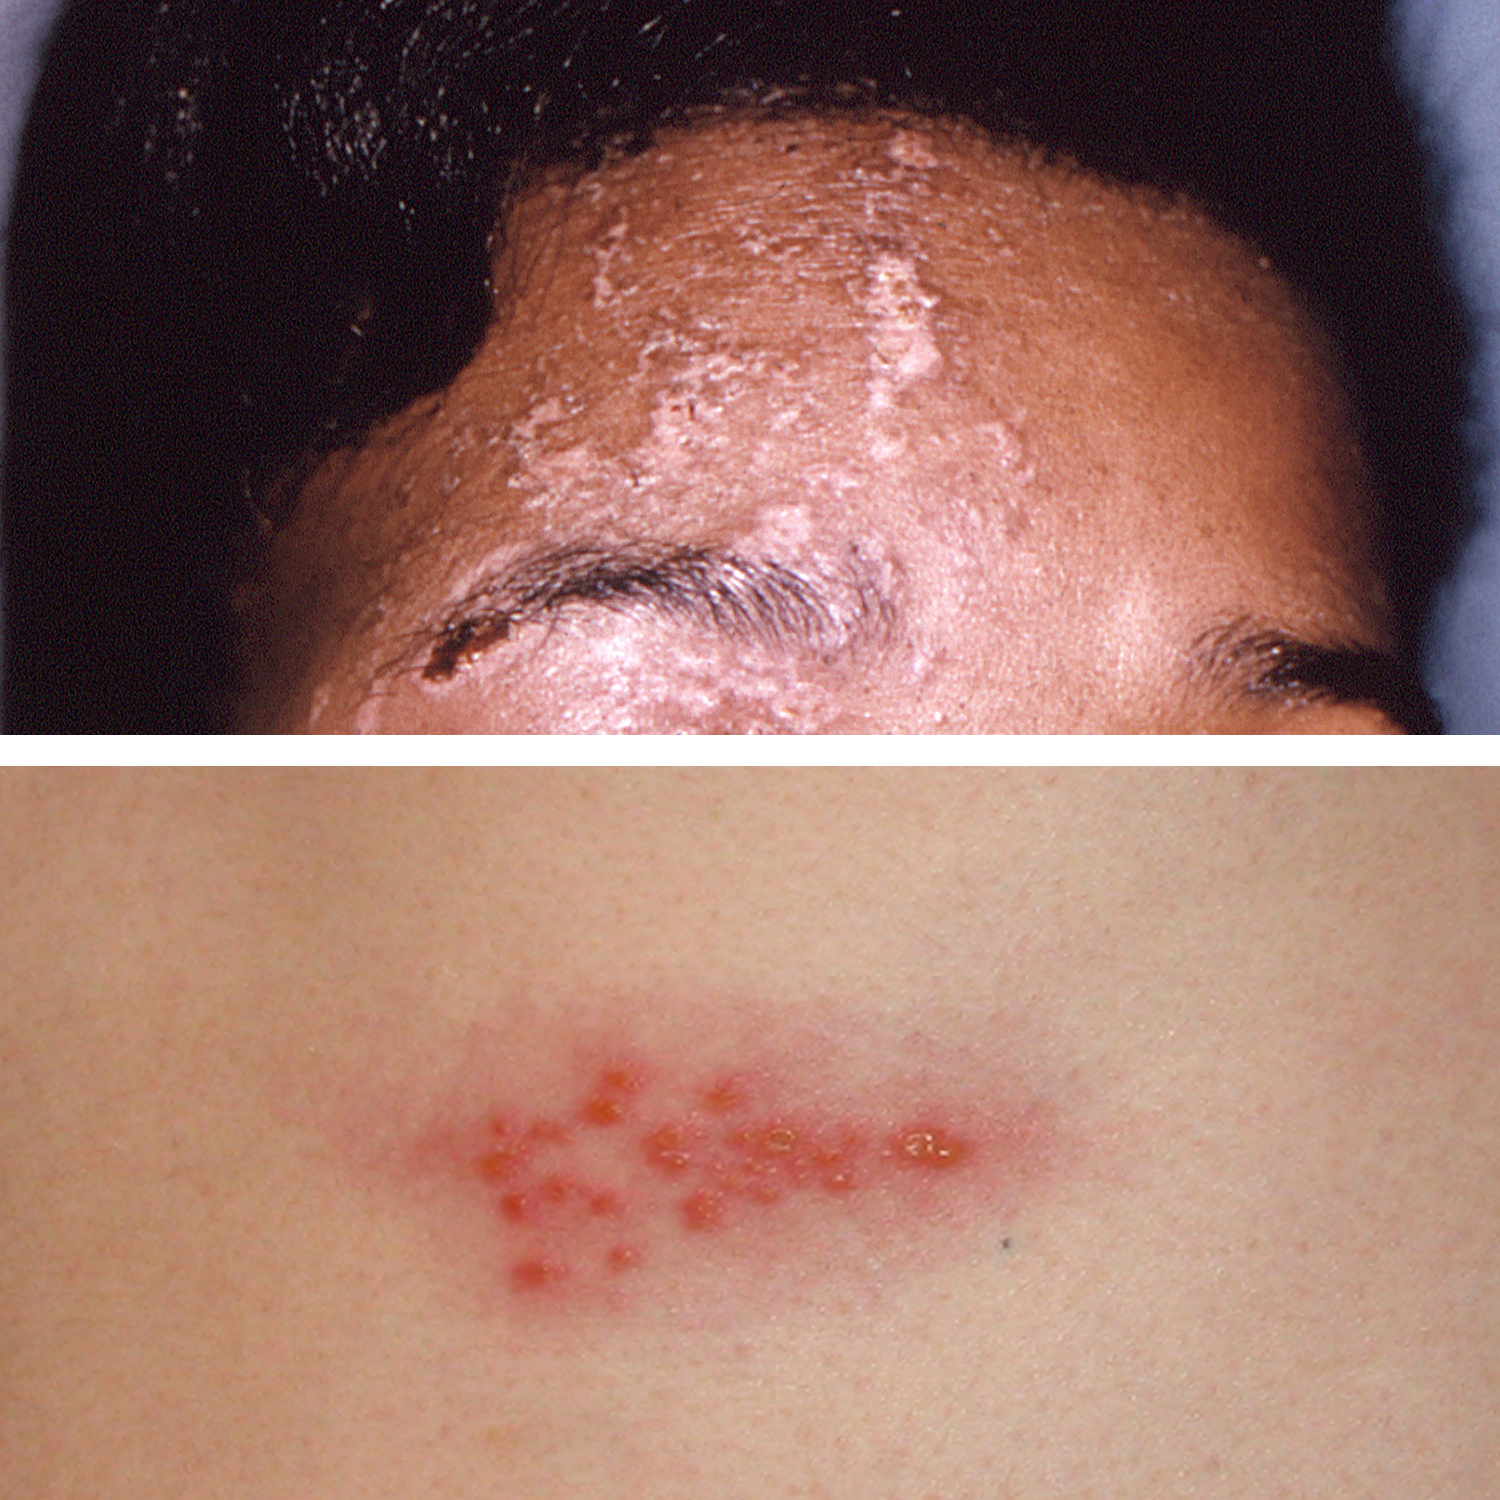 26 Skin Rash Pictures - How to ID Skin Rash Symptoms